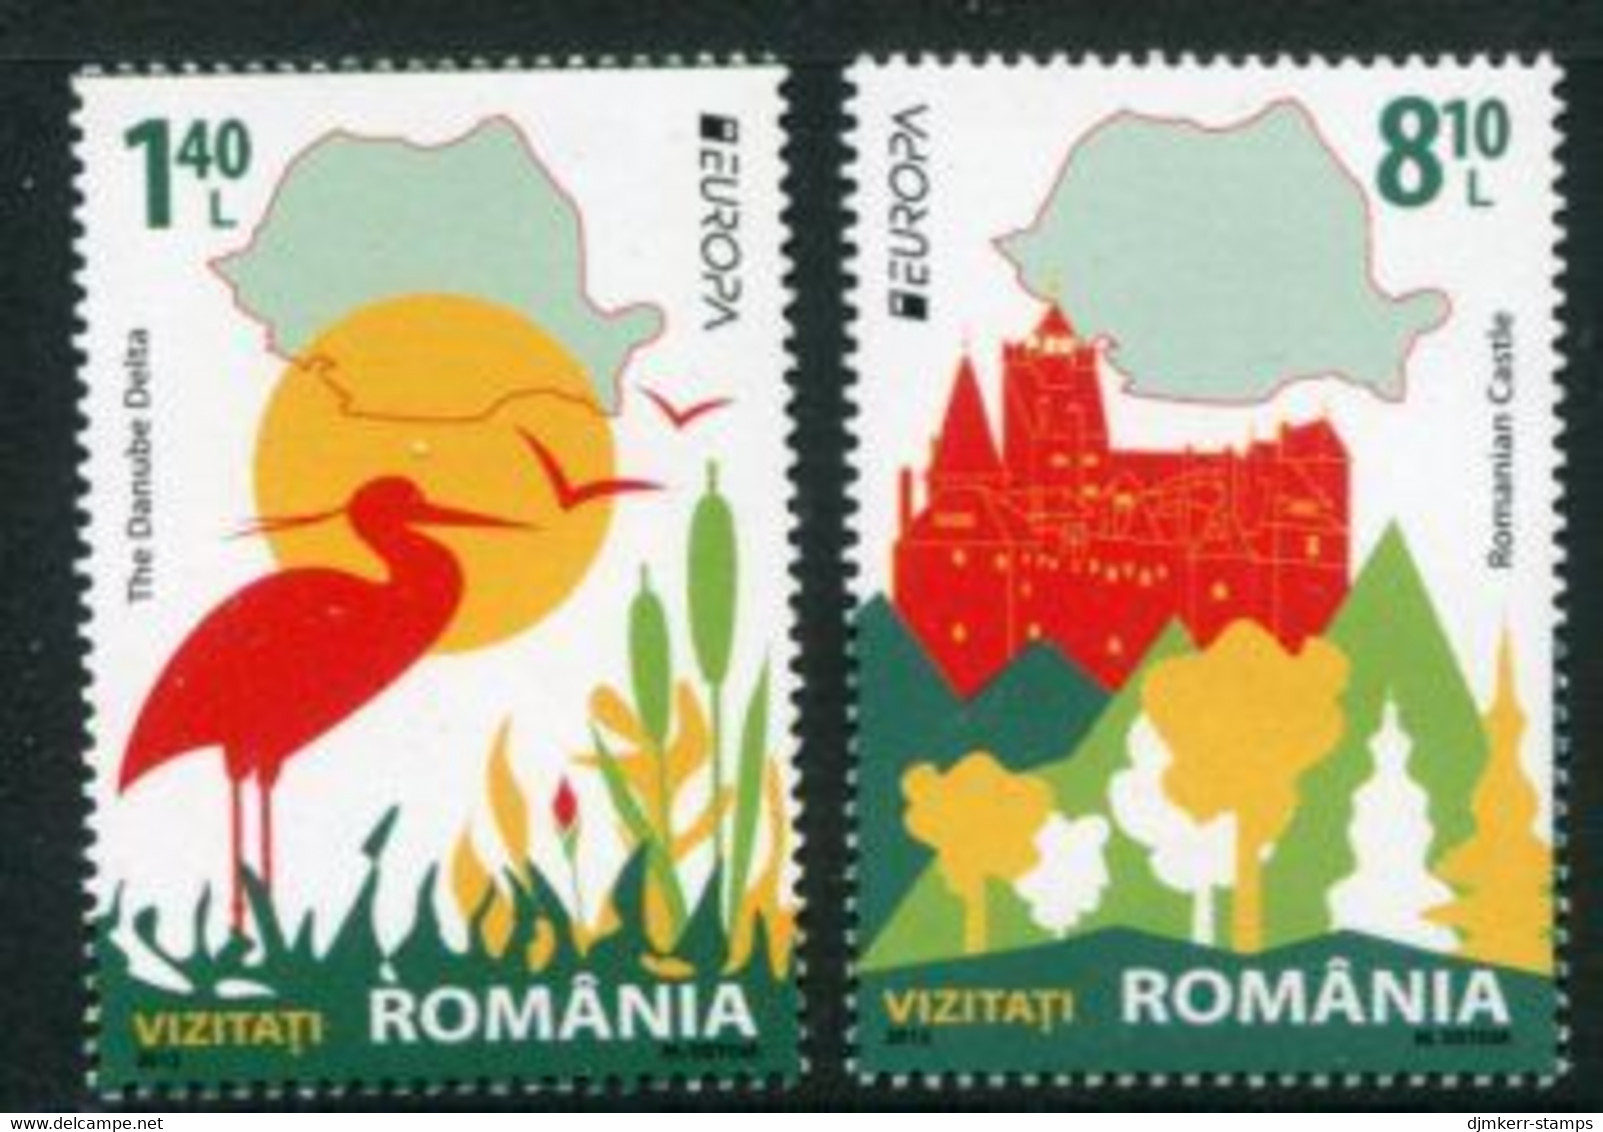 ROMANIA 2012 Europa: Tourism  MNH / **.  Michel 6617-18 - Unused Stamps